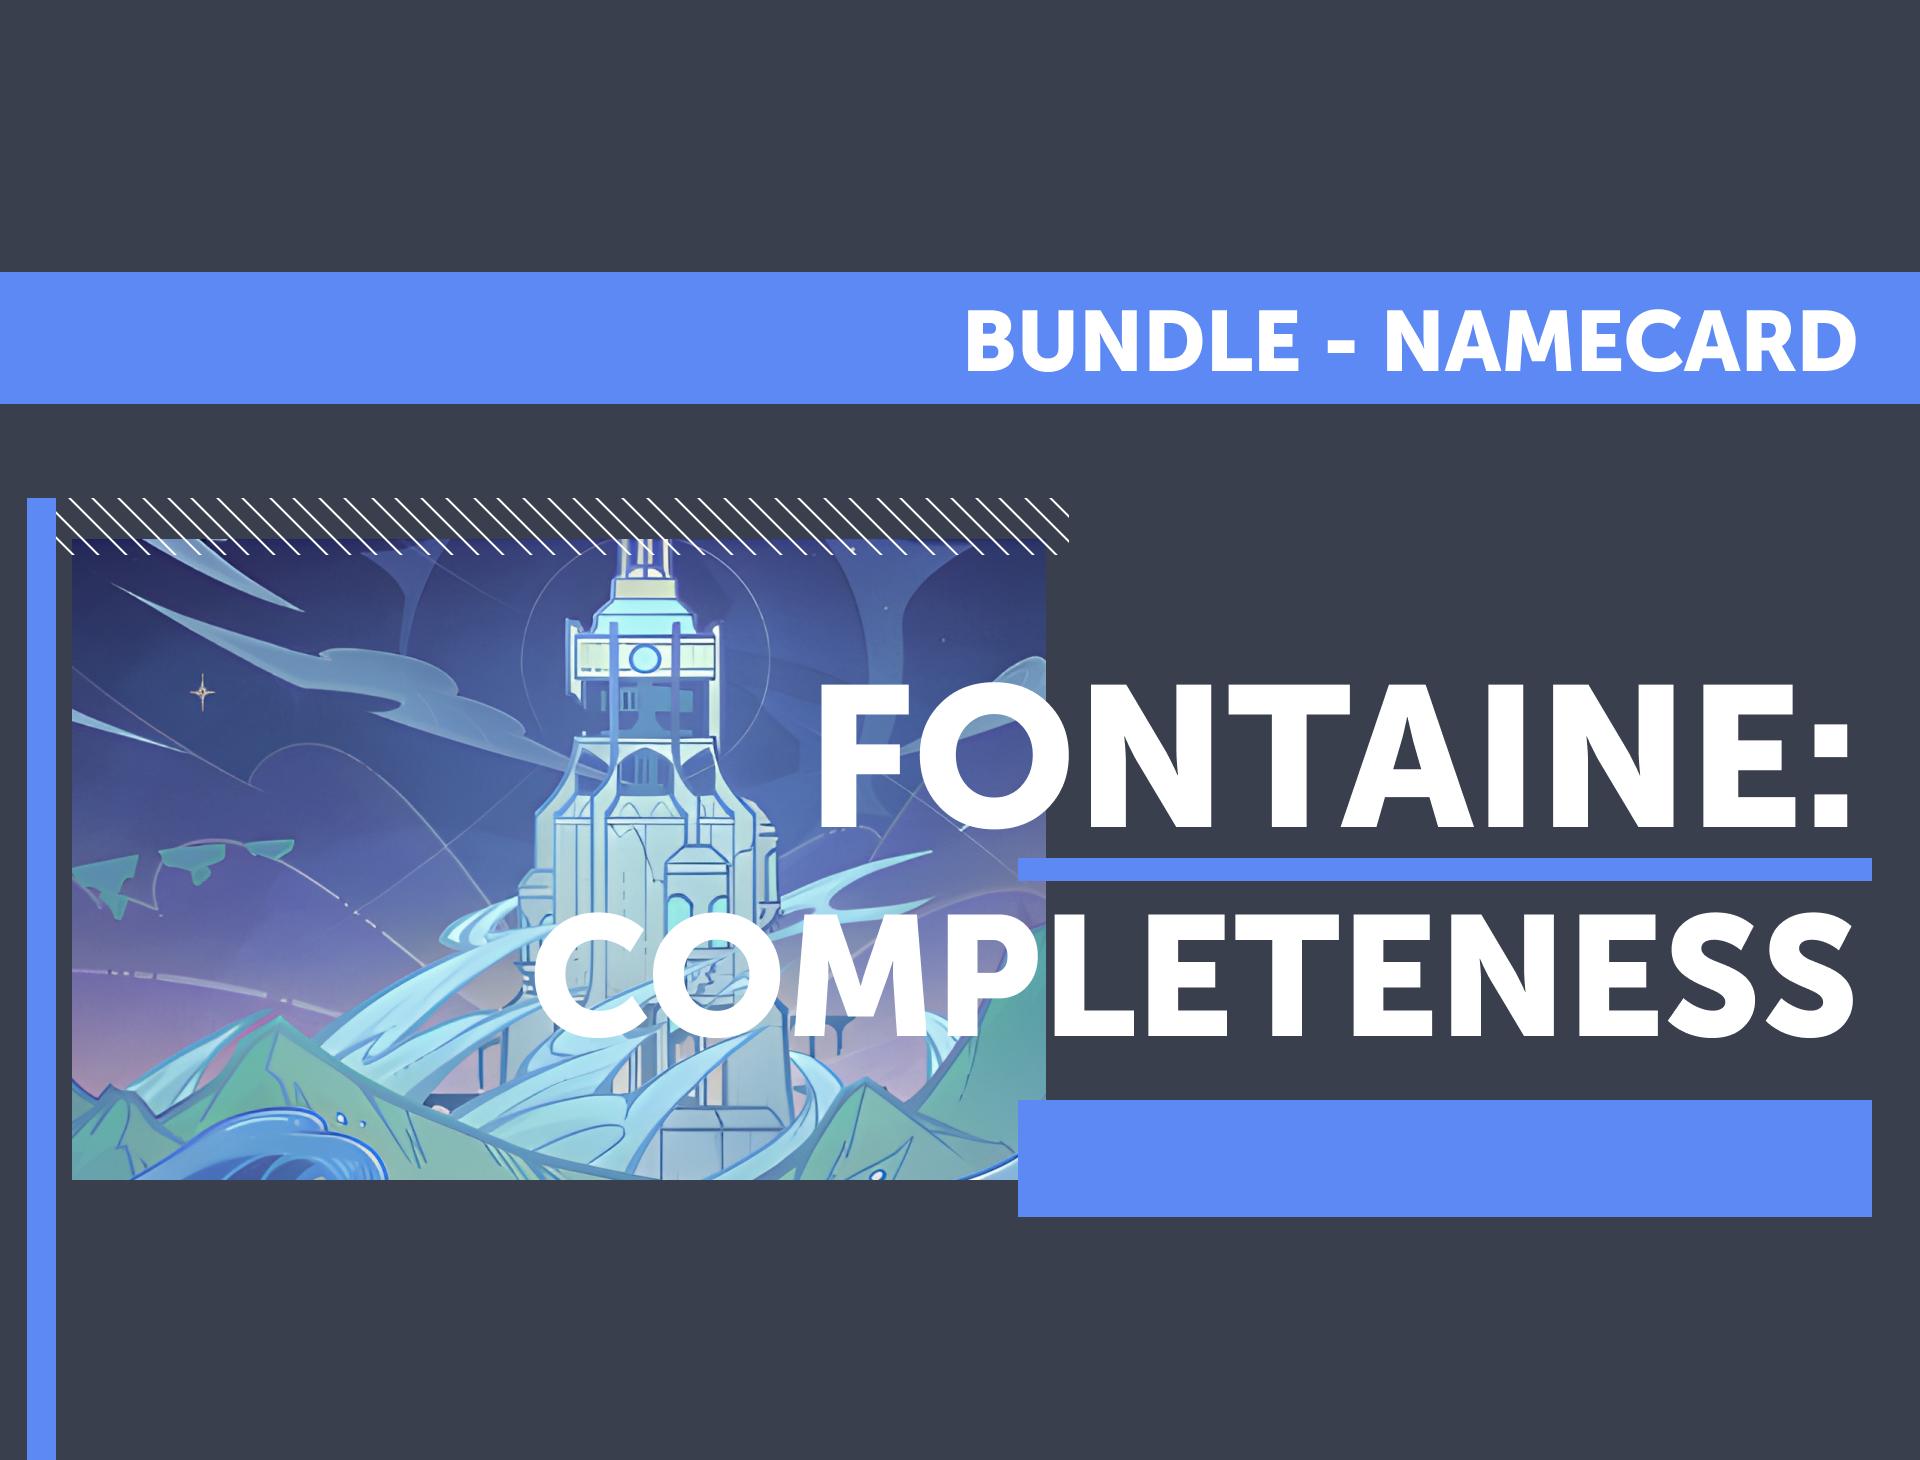 Bundle - Fontaine: Completeness Namecard